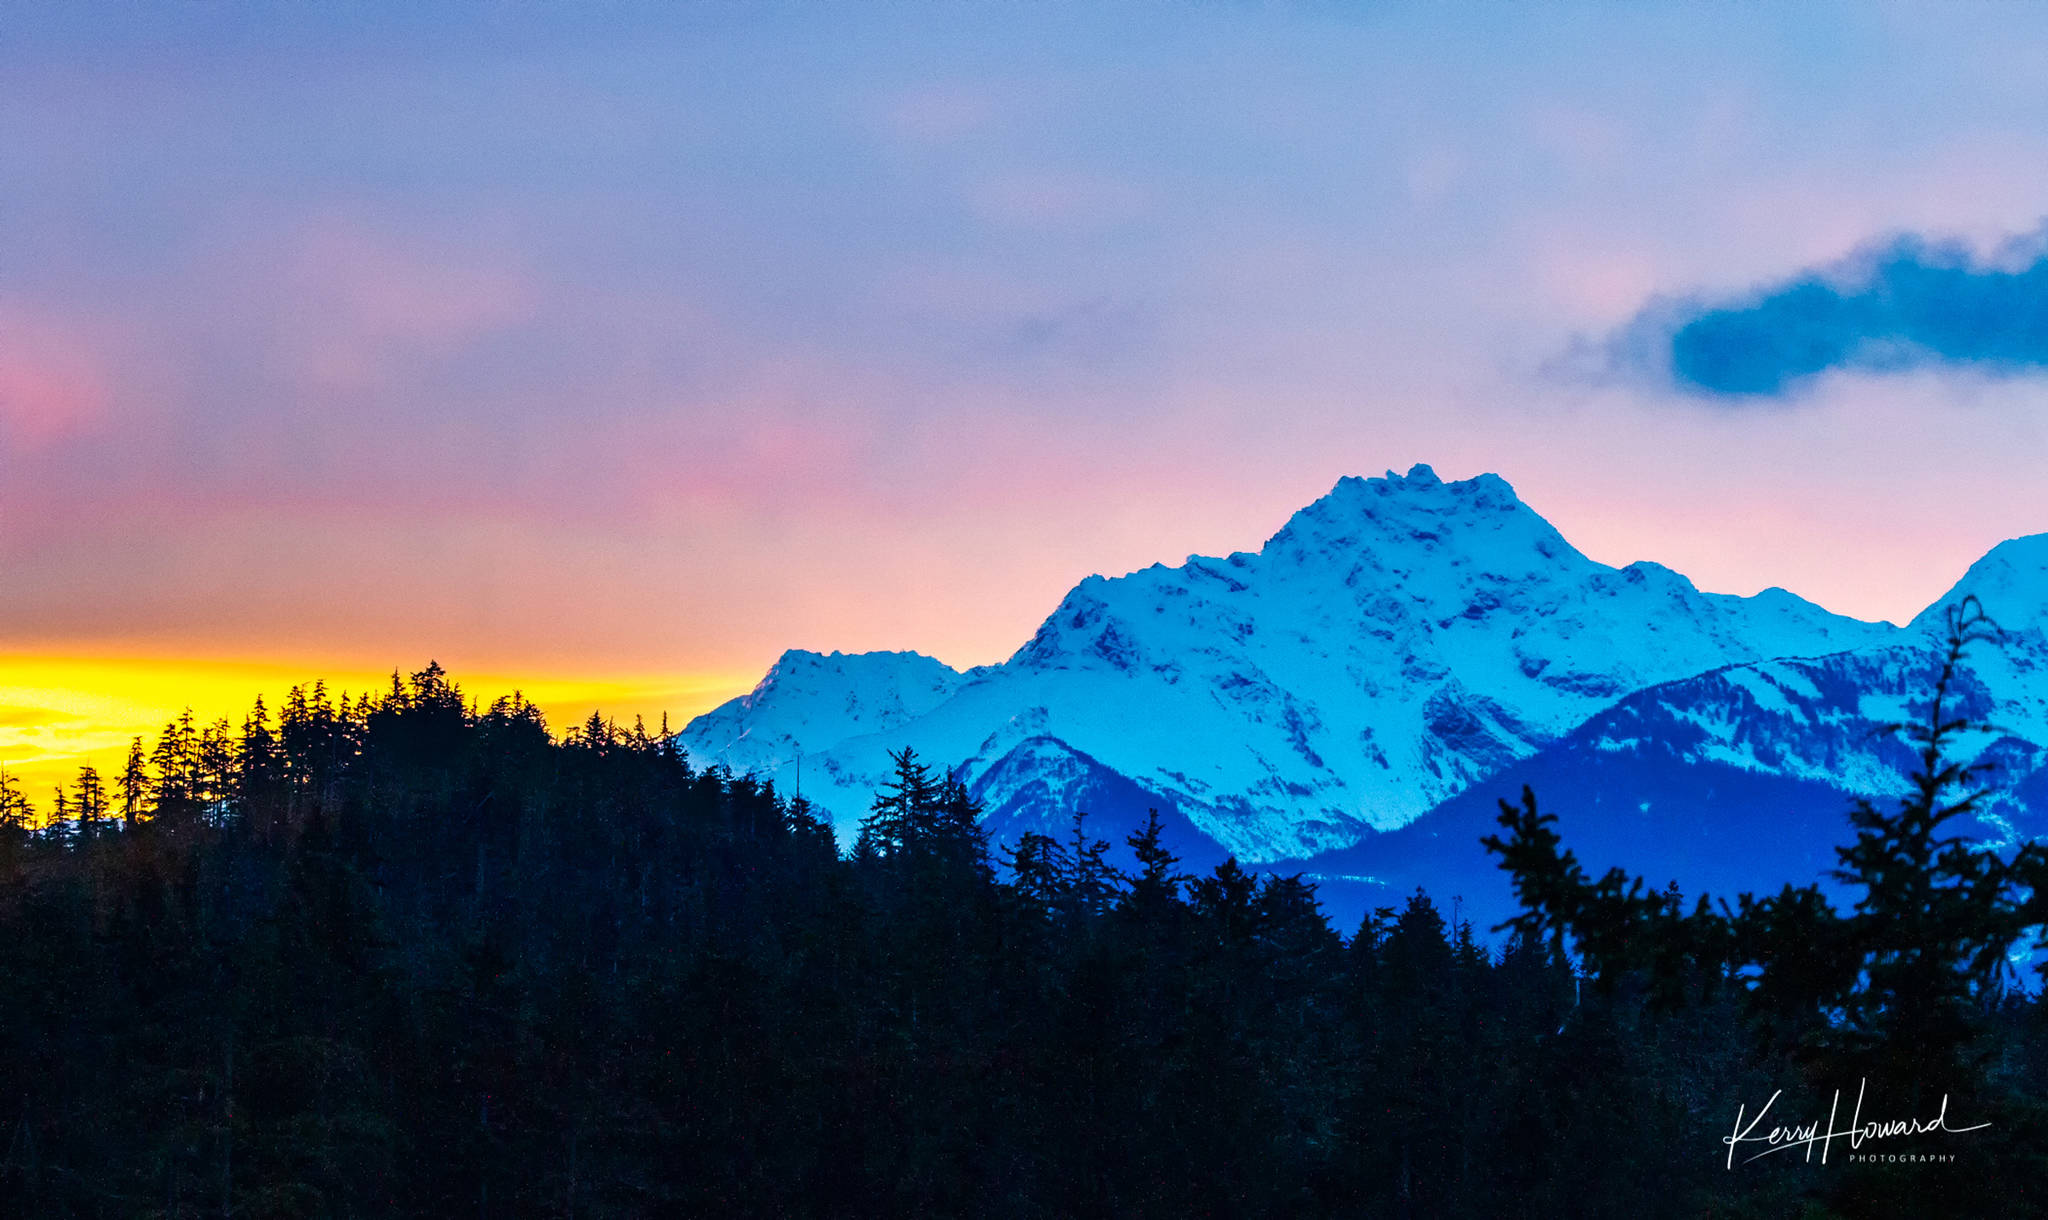 Cold and colorful sunrise, Eagle Peak. (Courtesy Photo | Kerry Howard)